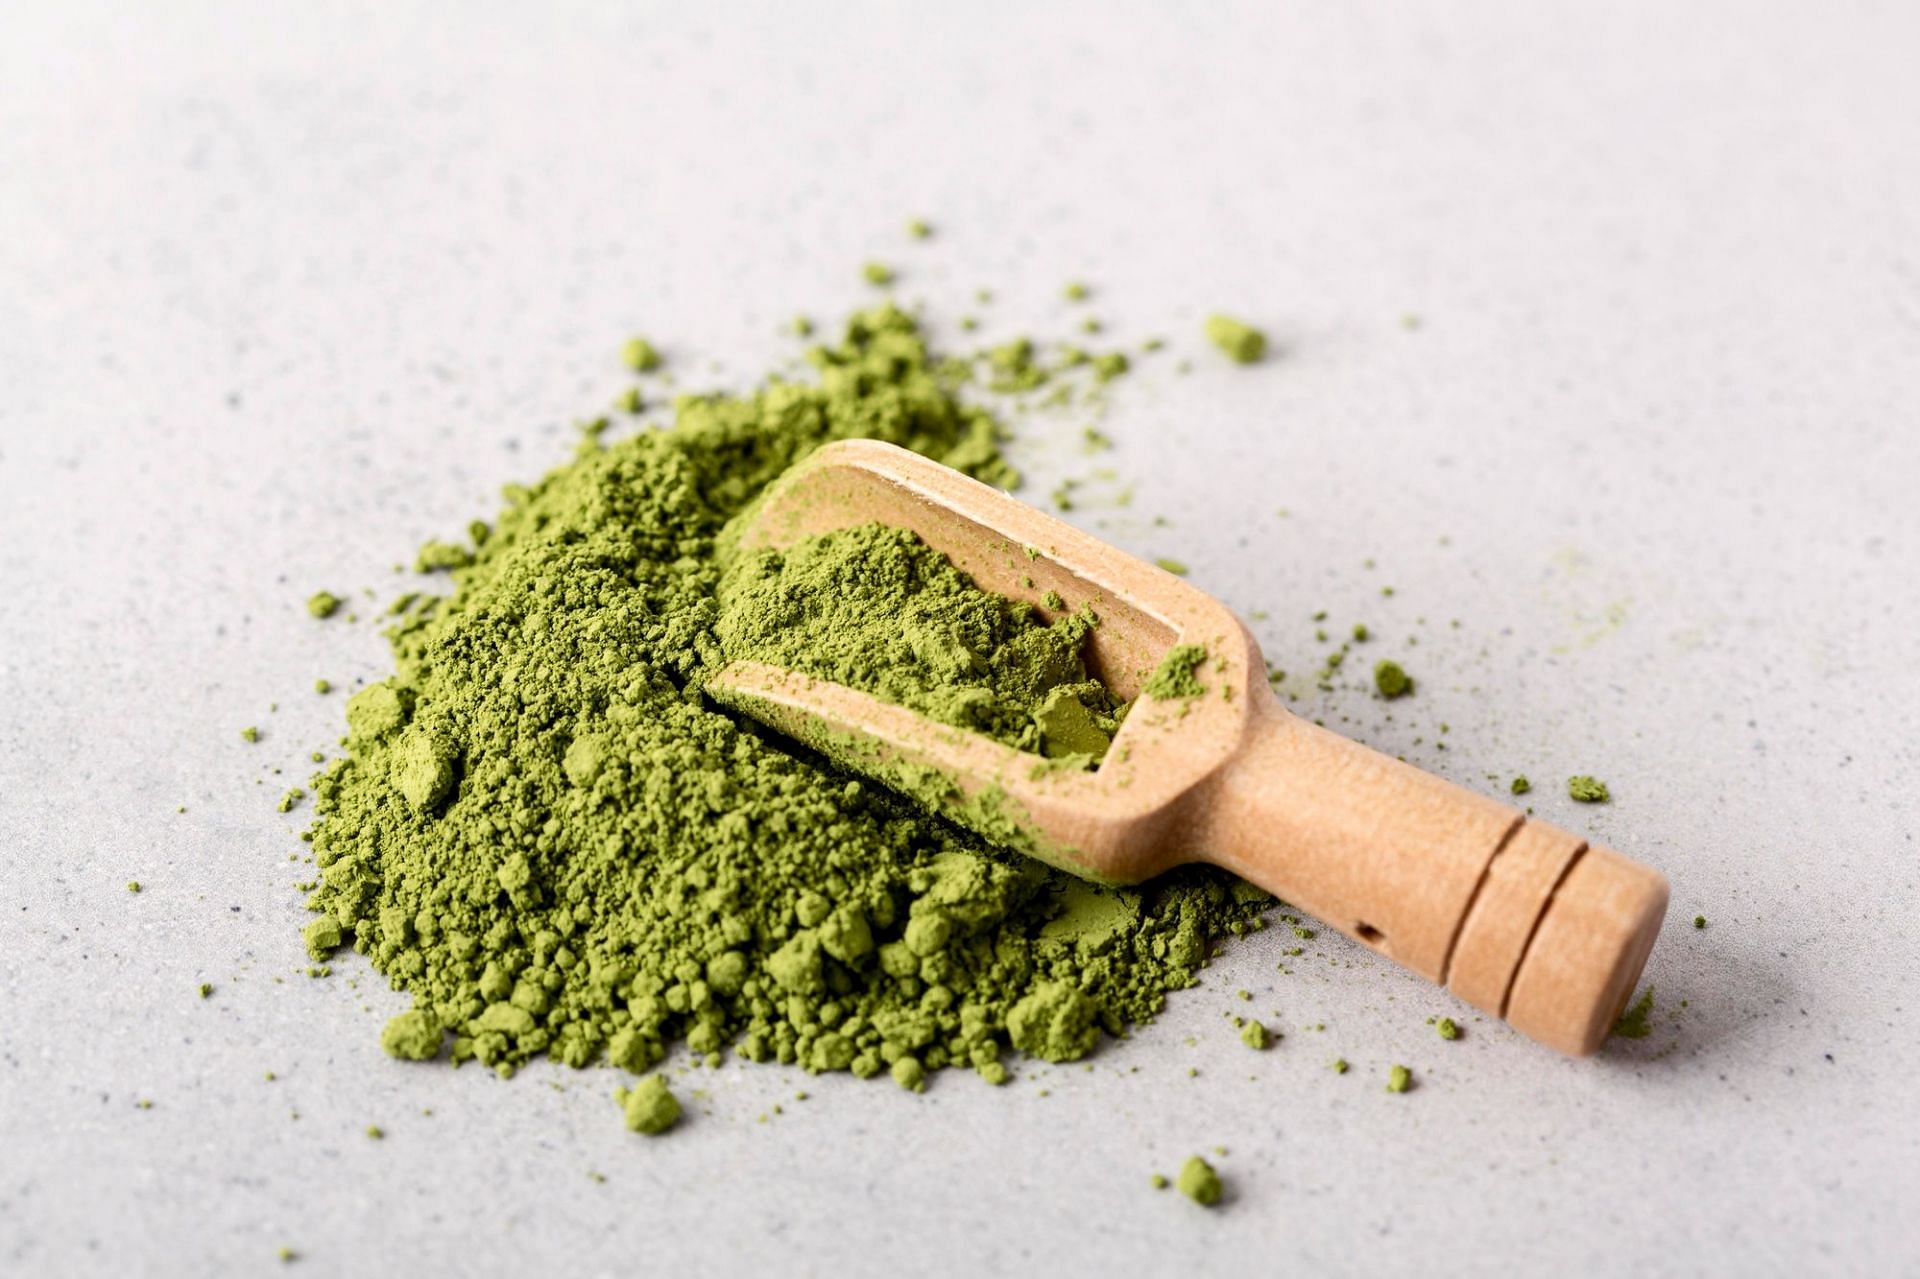 Enjoy neem benefits with the neem powder (Image by freepik)